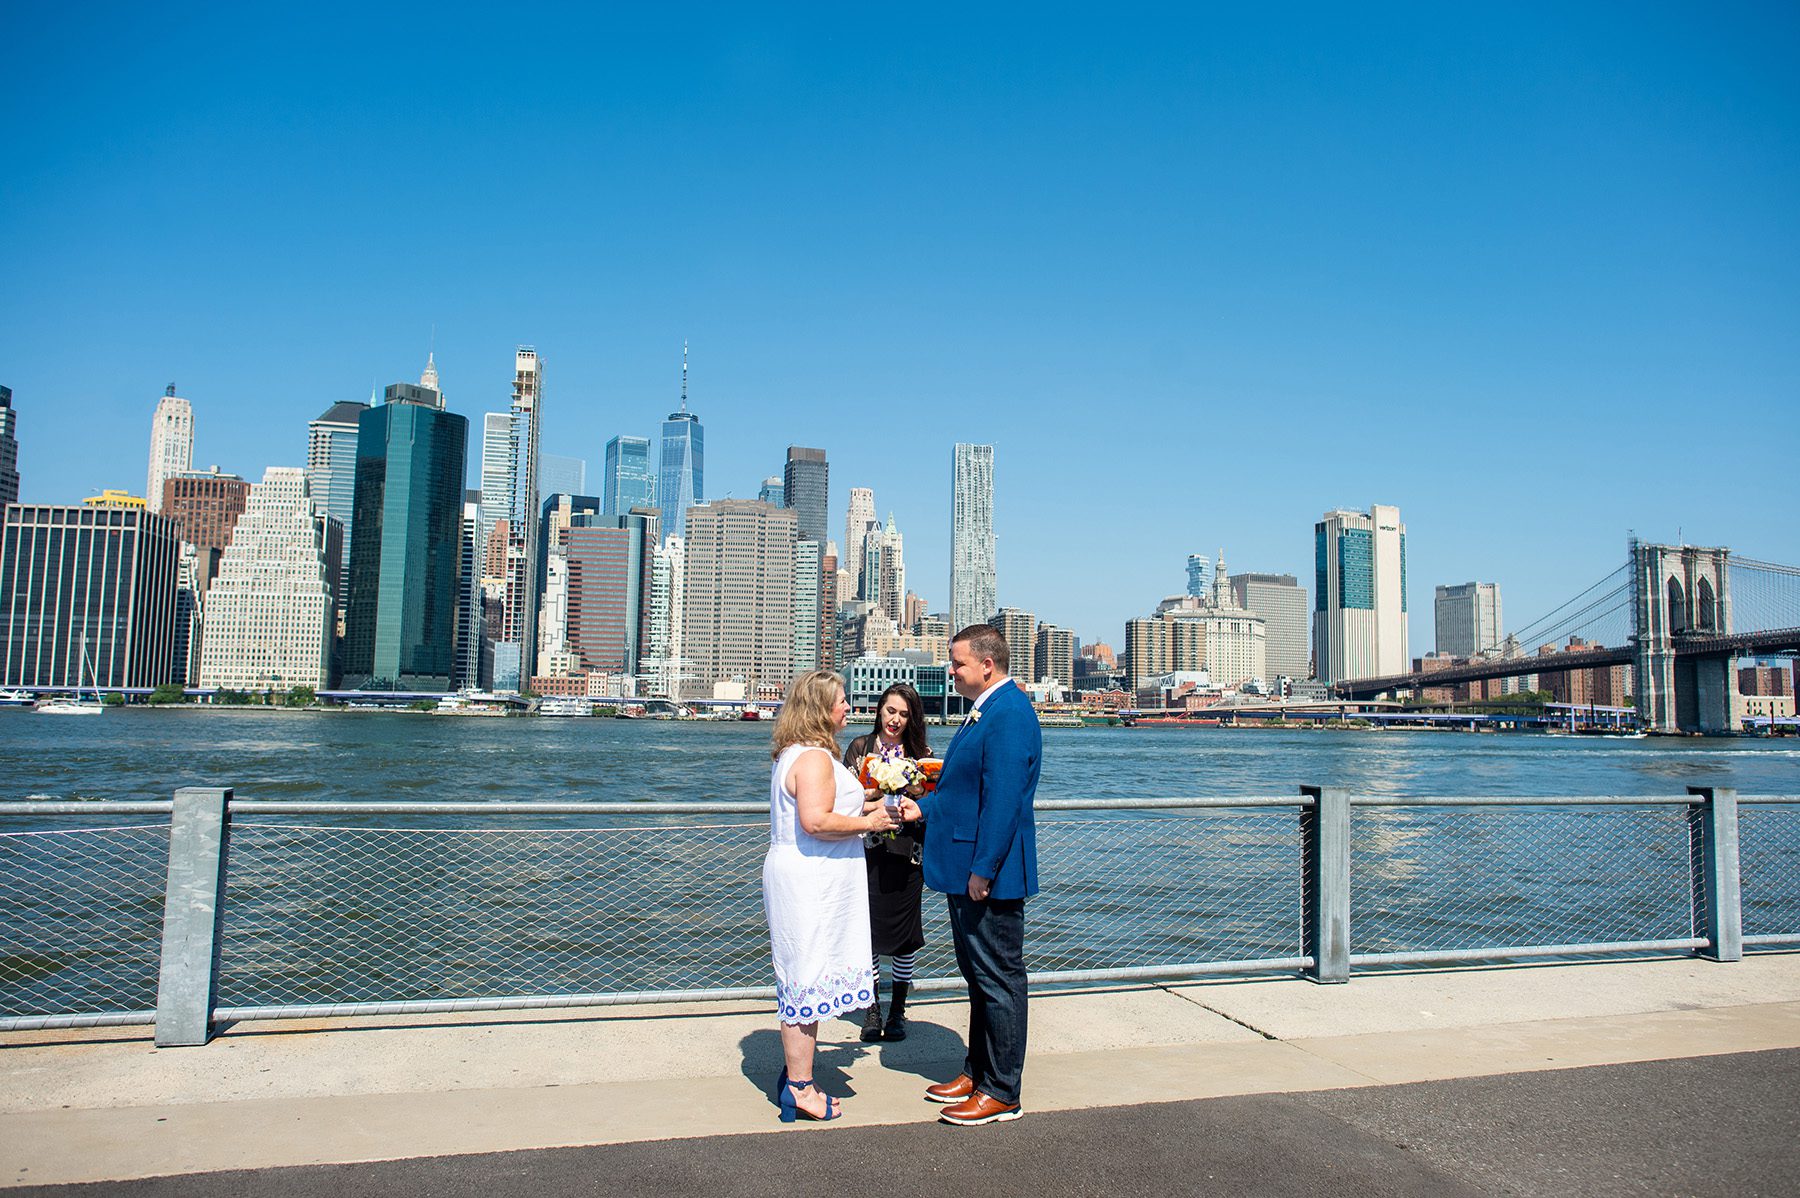 Brooklyn Bridge Park Ceremony Spots